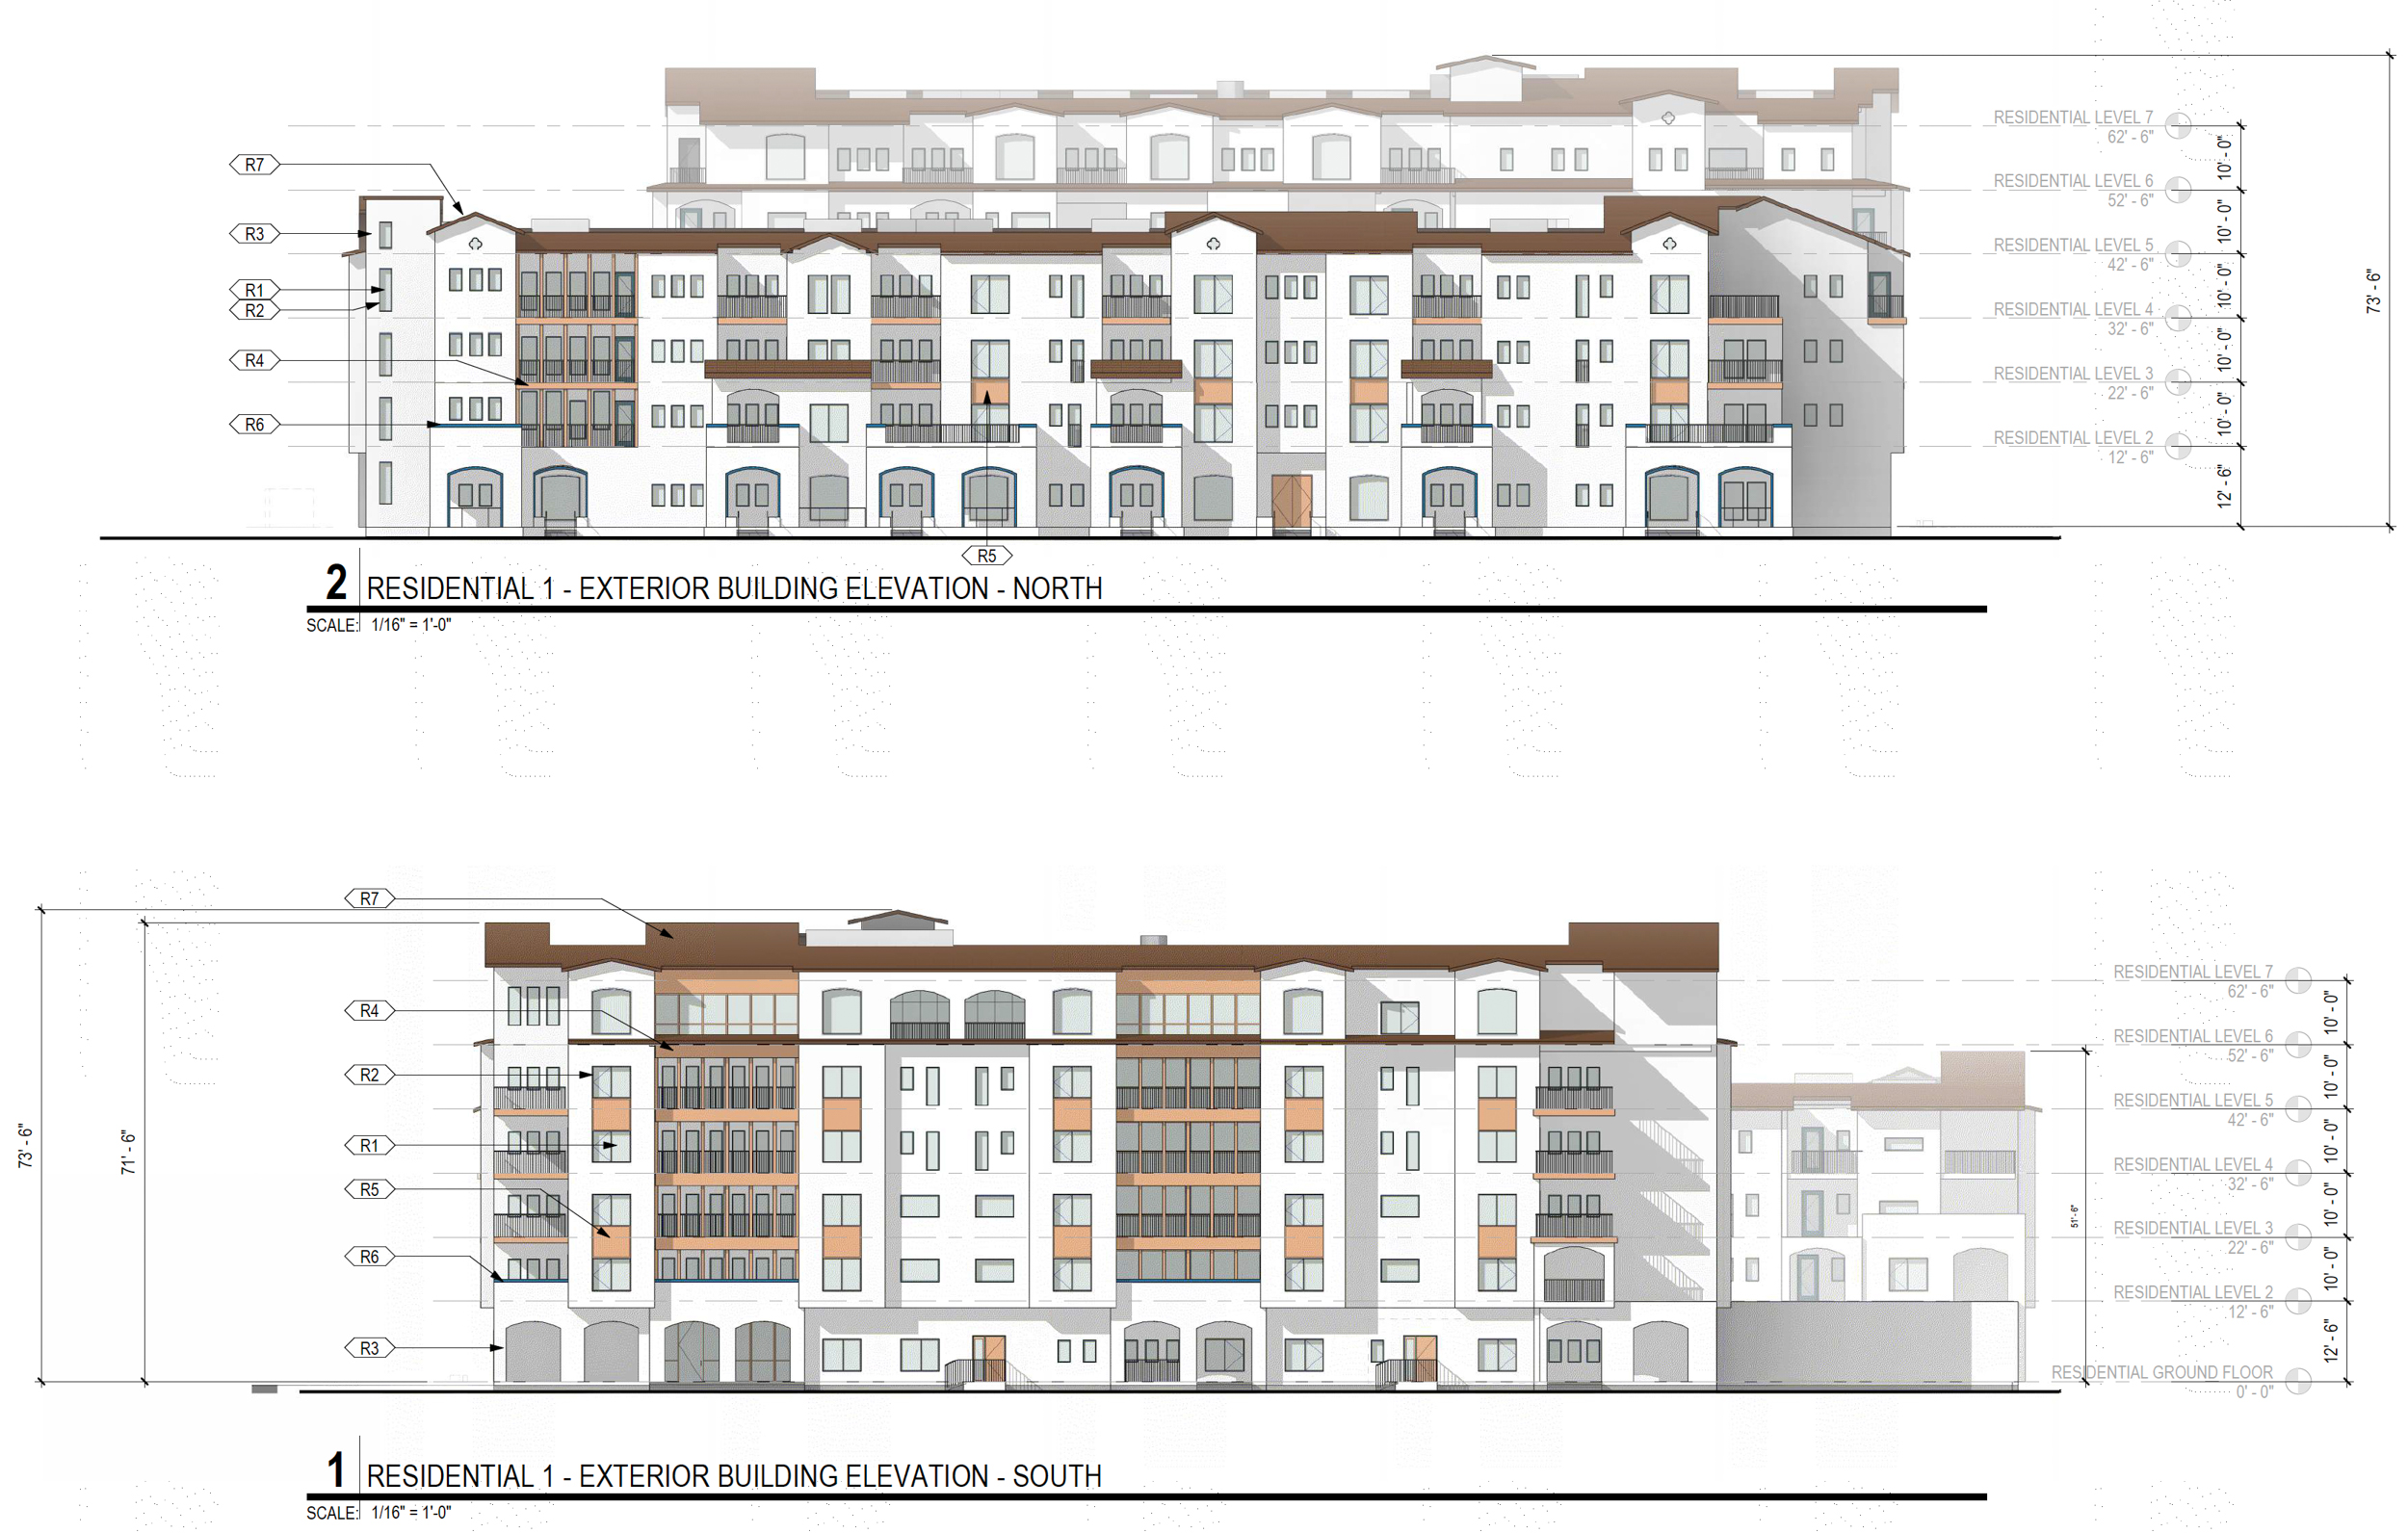 Parkline apartments facade elevation, illustration by STUDIOS Architecture